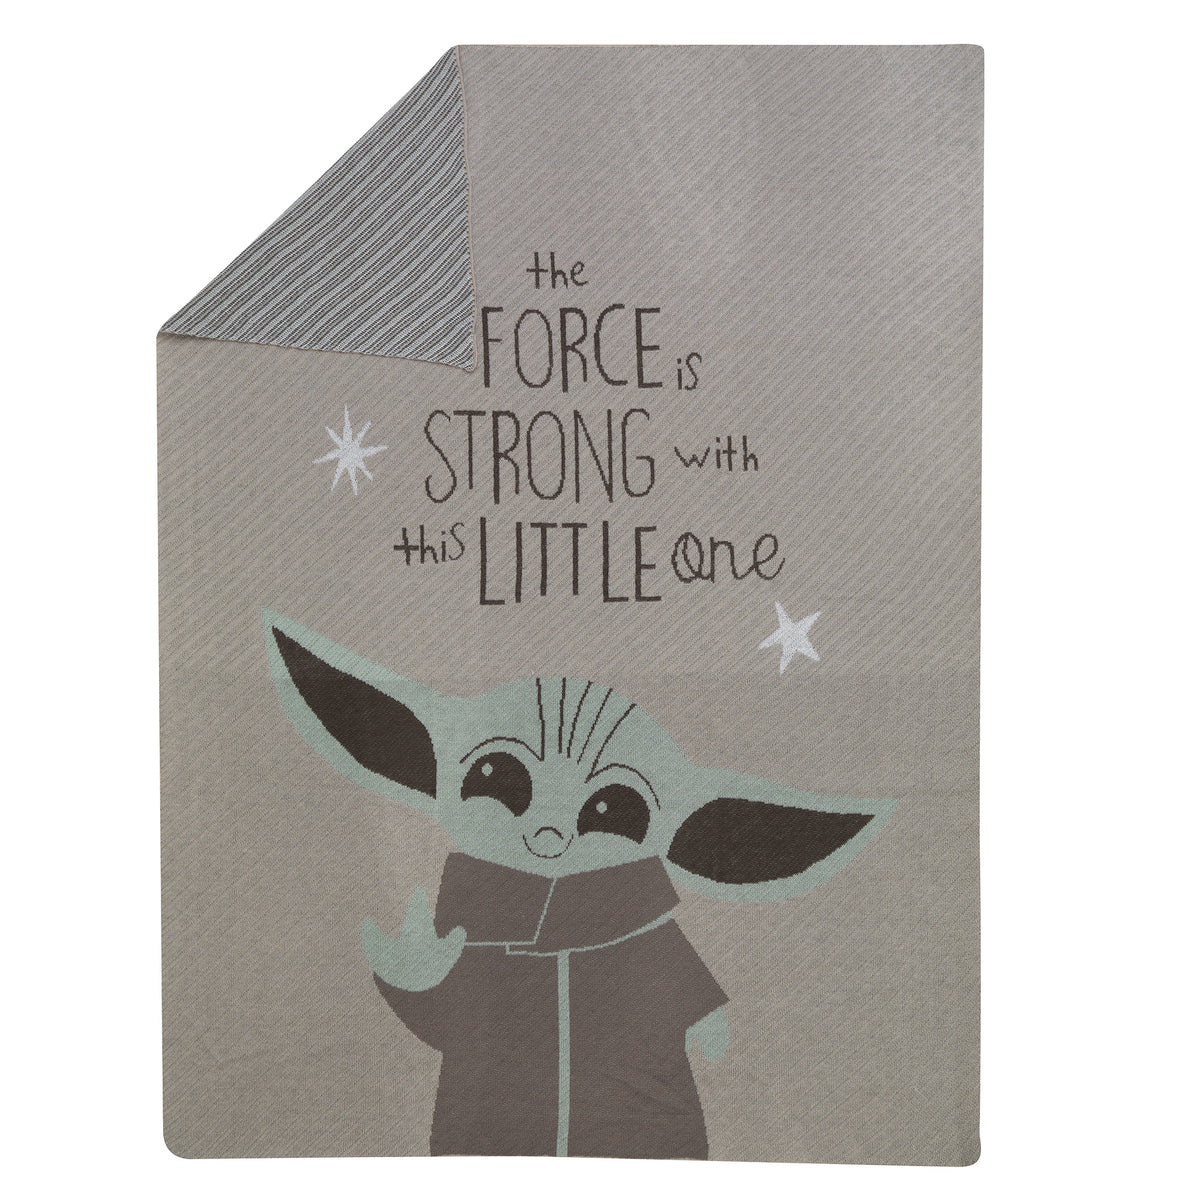 Star Wars Baby Yoda Mandalorian Grogu/The Child Knit Baby Blanket